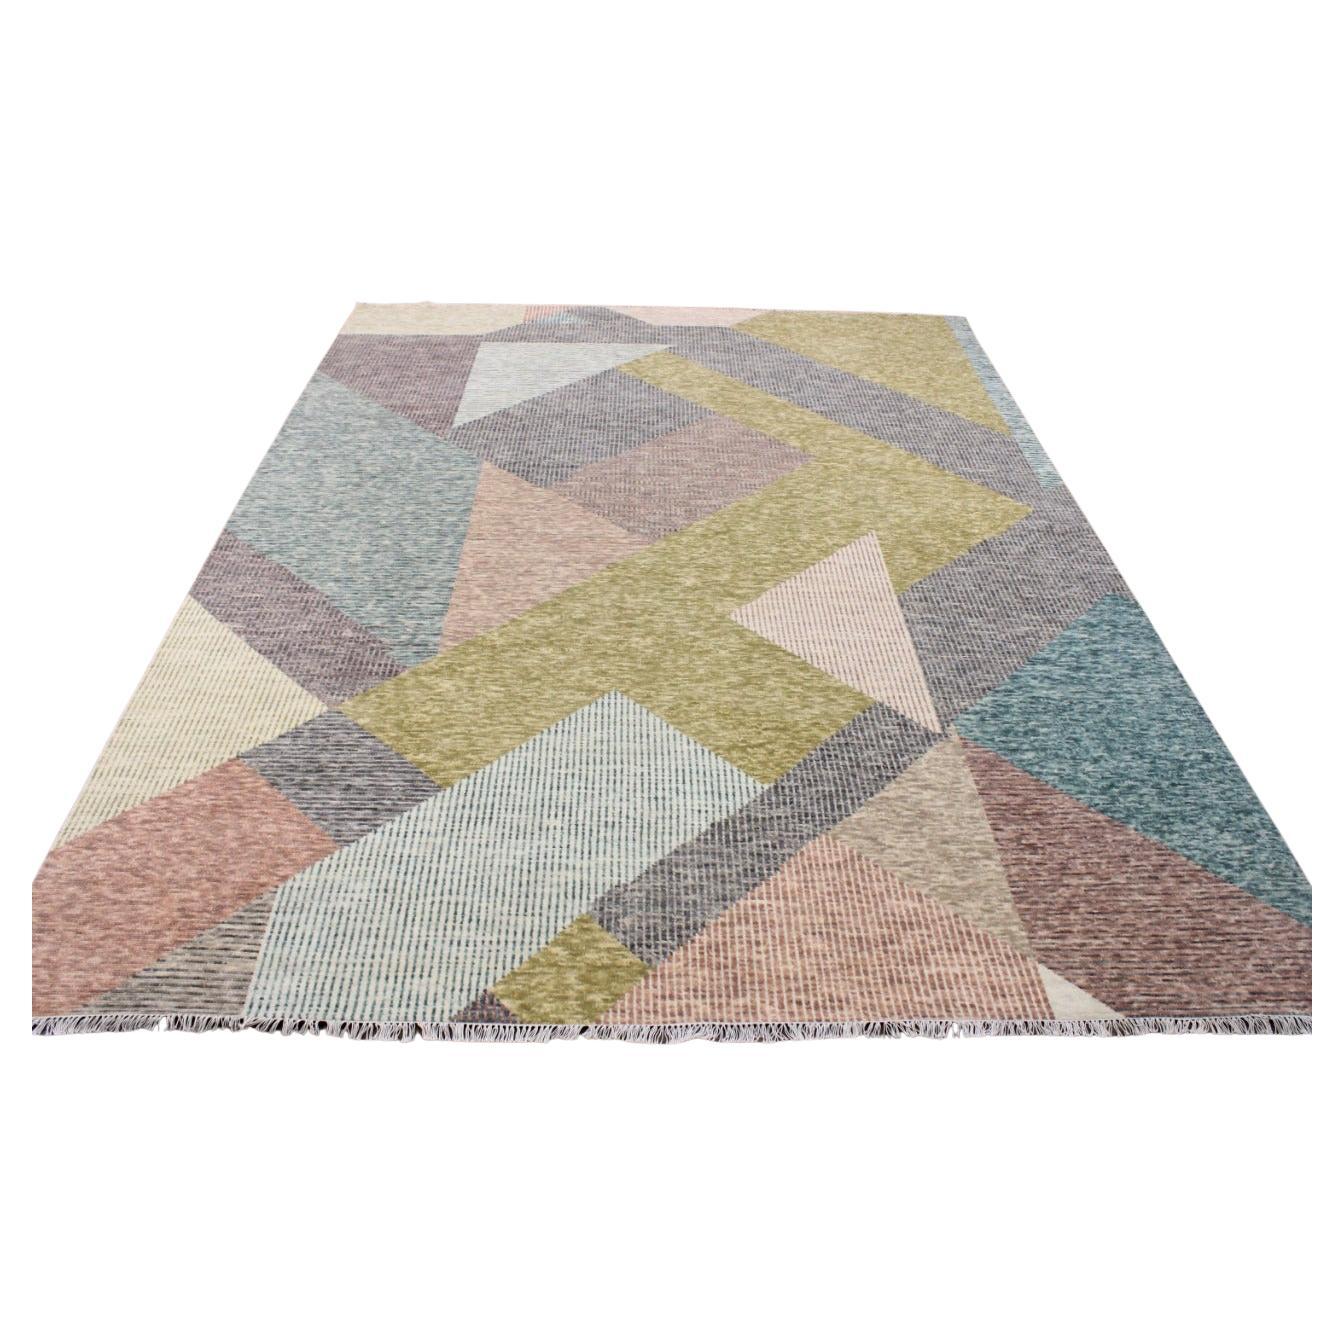 Nice contemporary modern art deco design rug For Sale